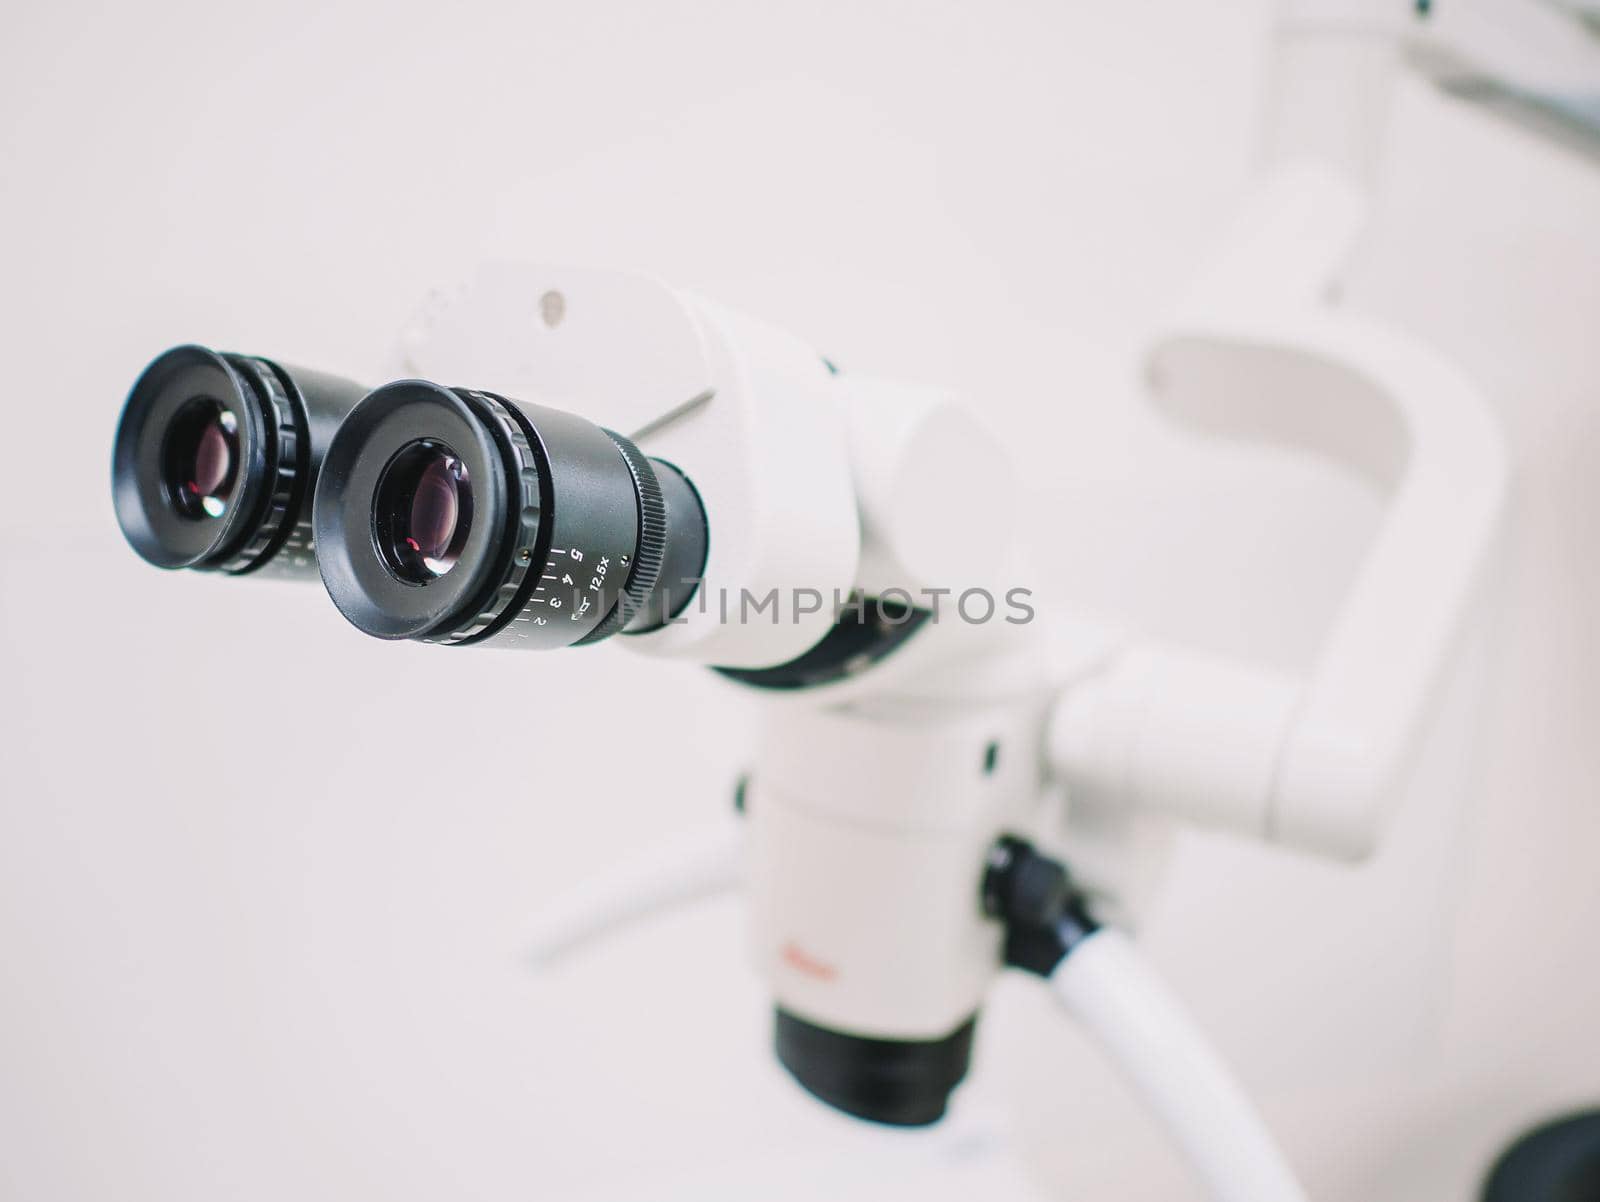 The image of the professional Dental endodontic binocular microscope by kristina_kokhanova